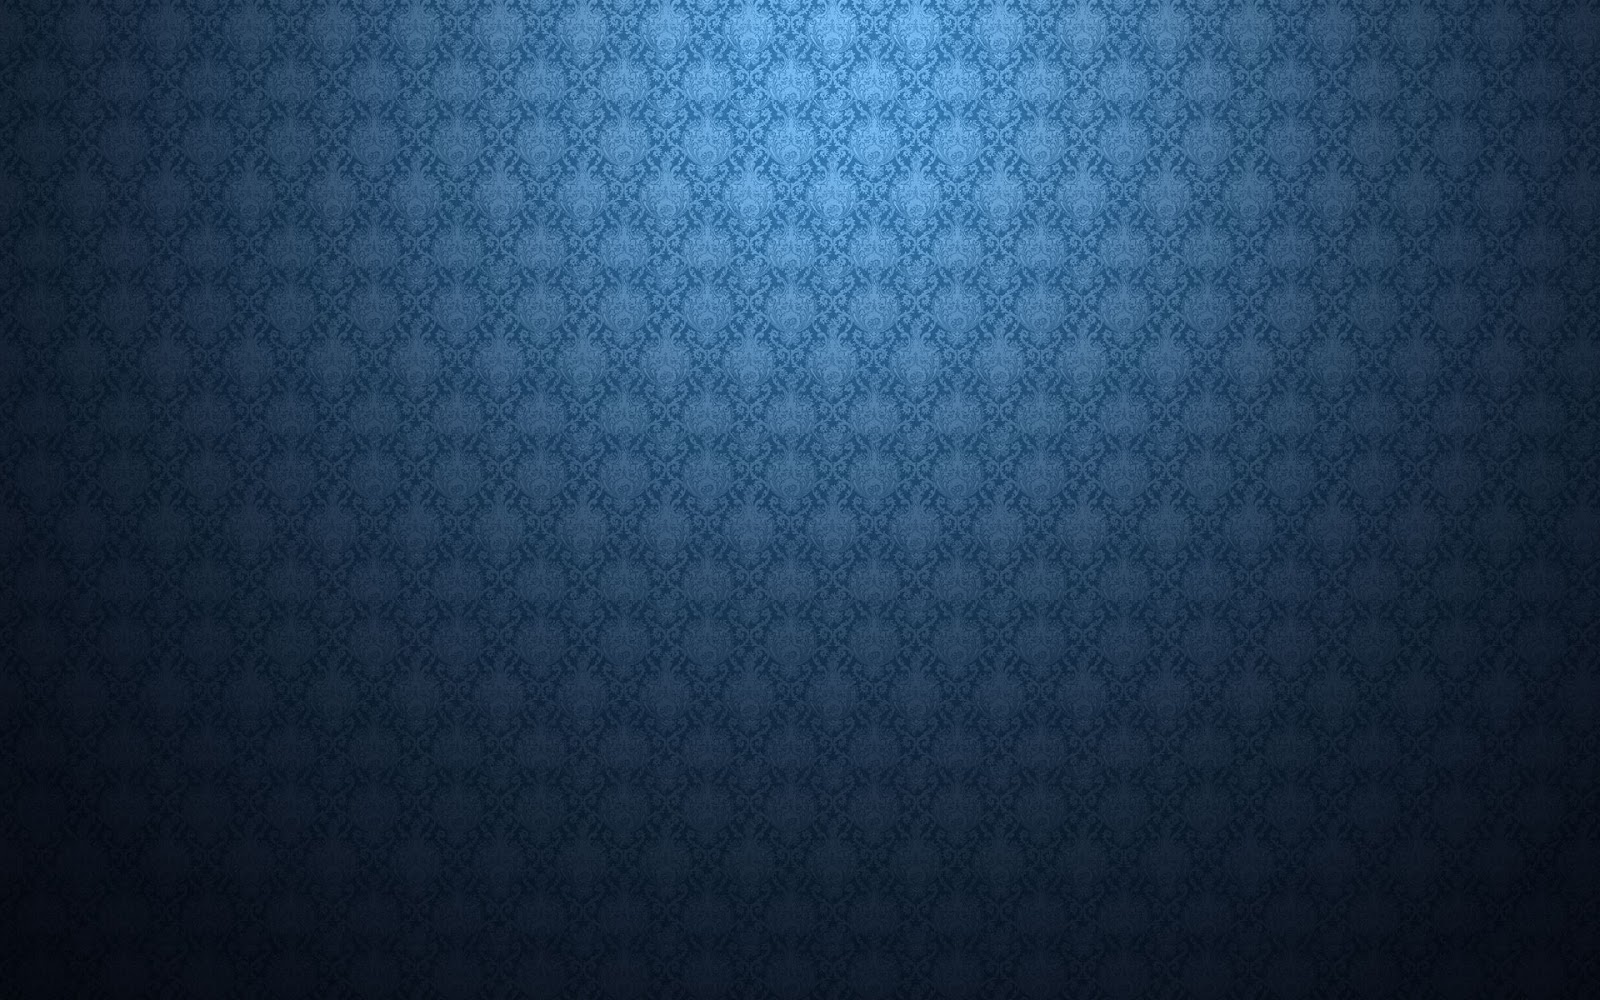 BLUE Art Background Wallpaper Image HD Zeromin0 1600x1000